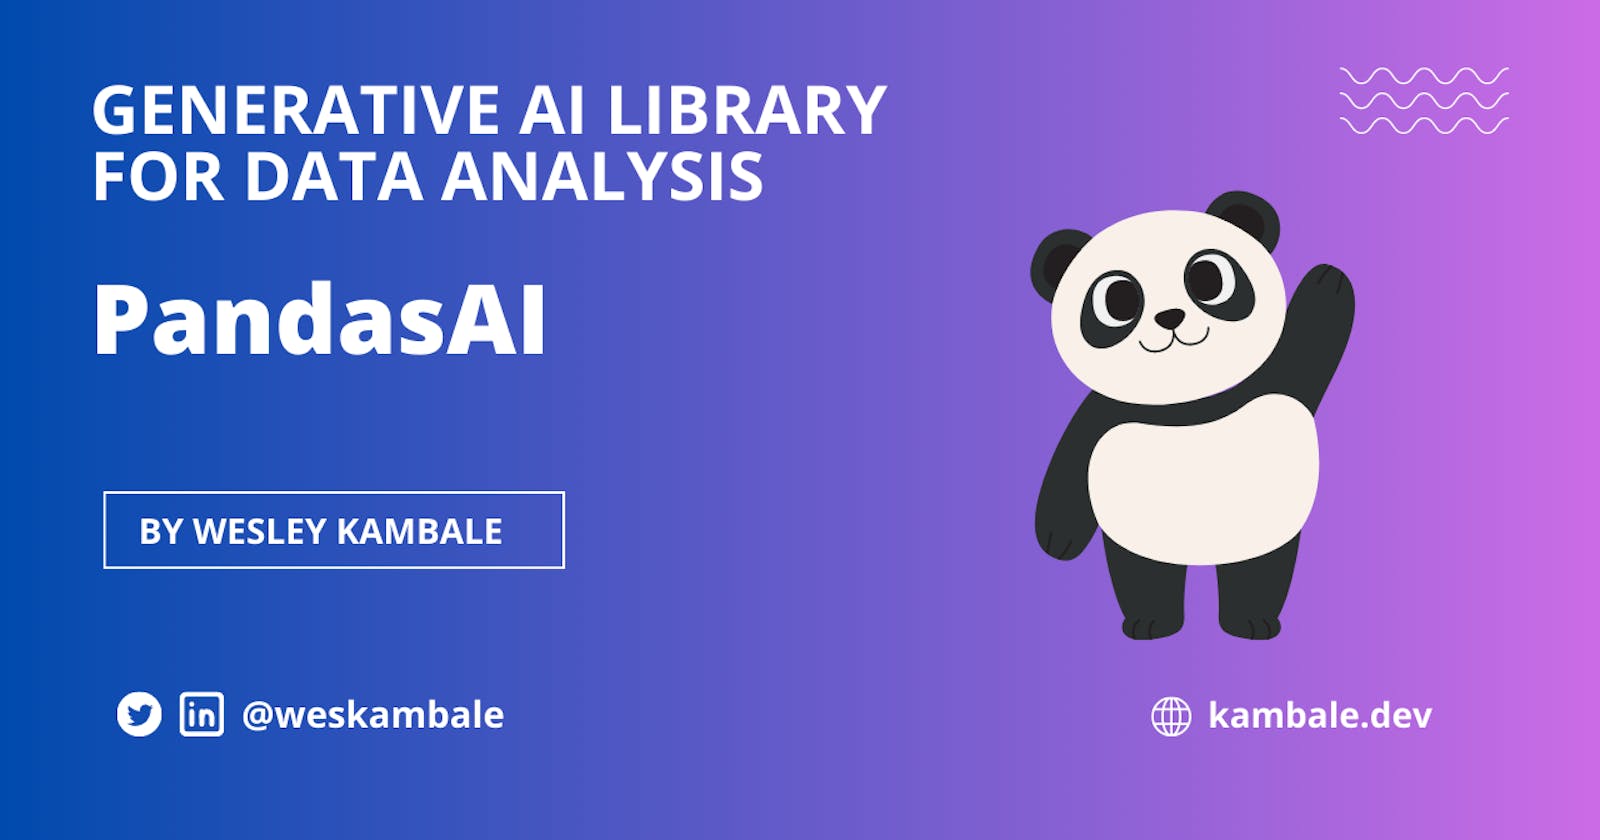 PandasAI: The Generative AI Library